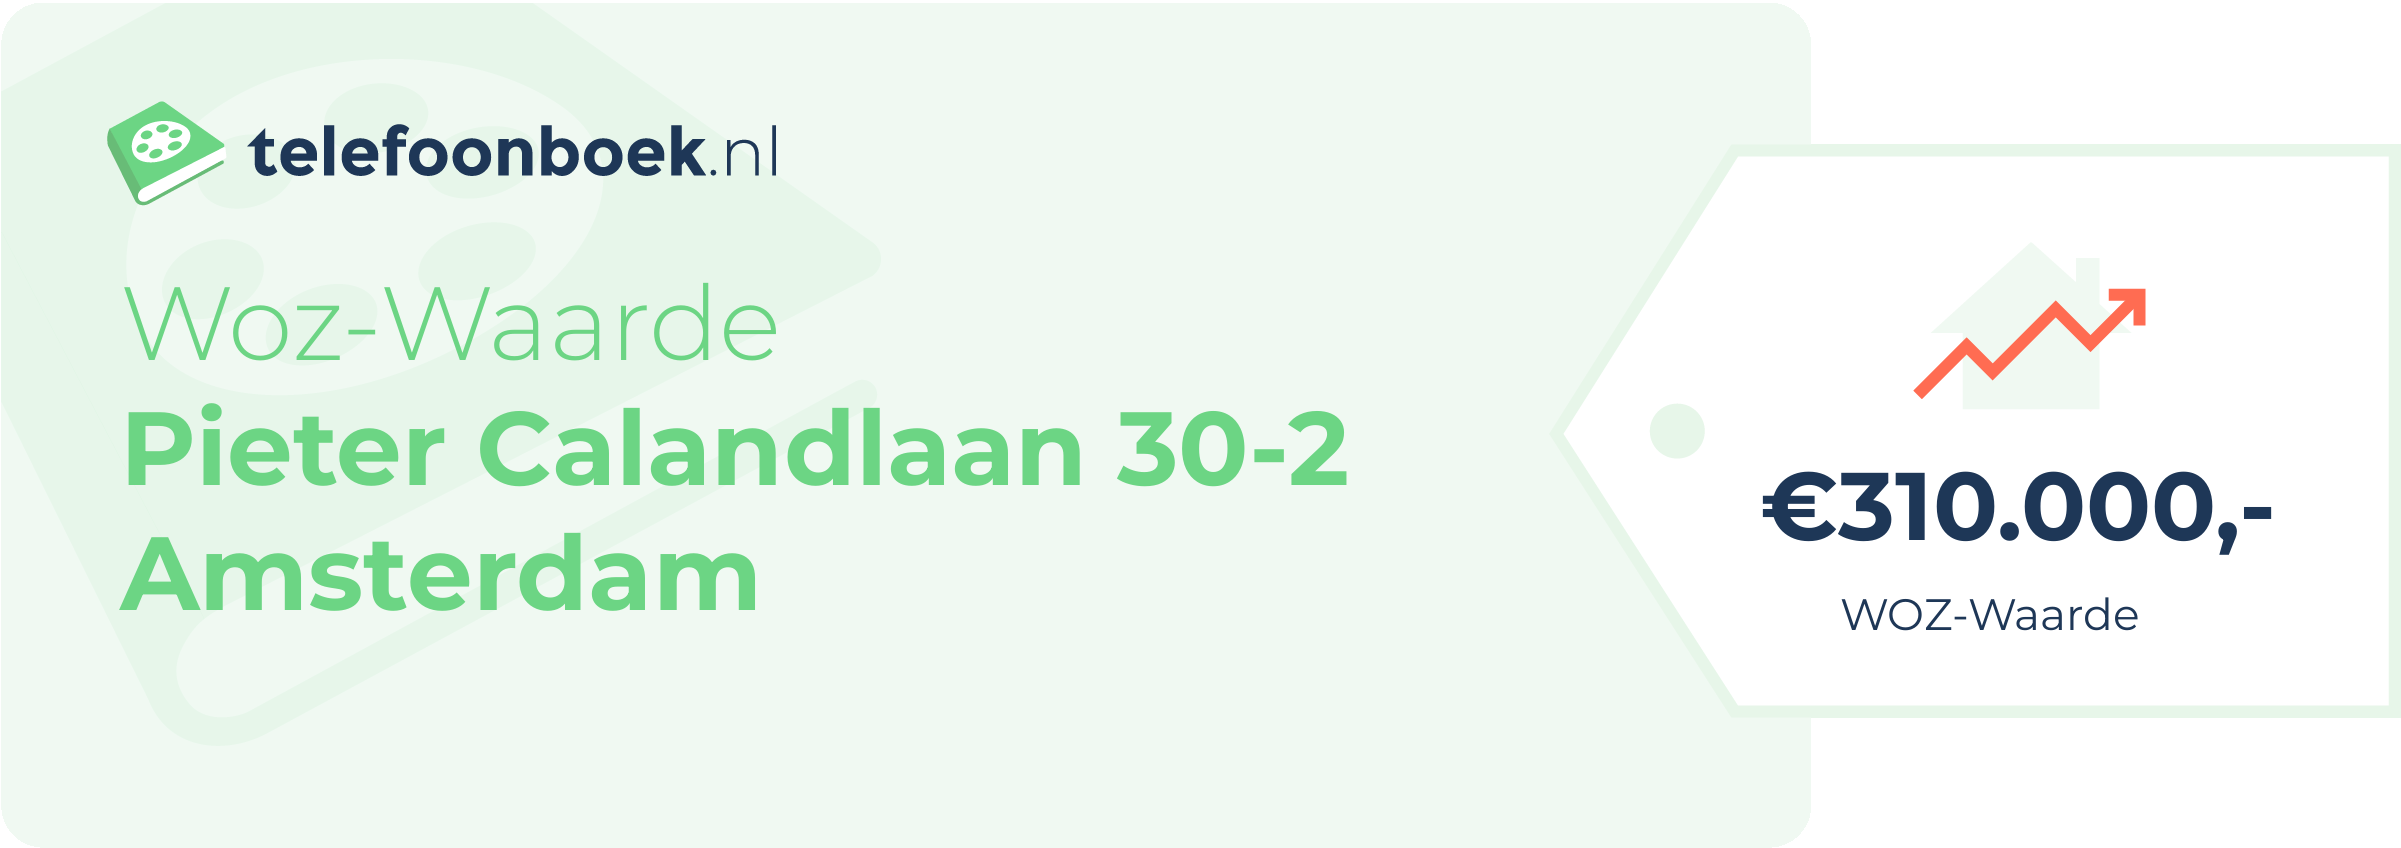 WOZ-waarde Pieter Calandlaan 30-2 Amsterdam